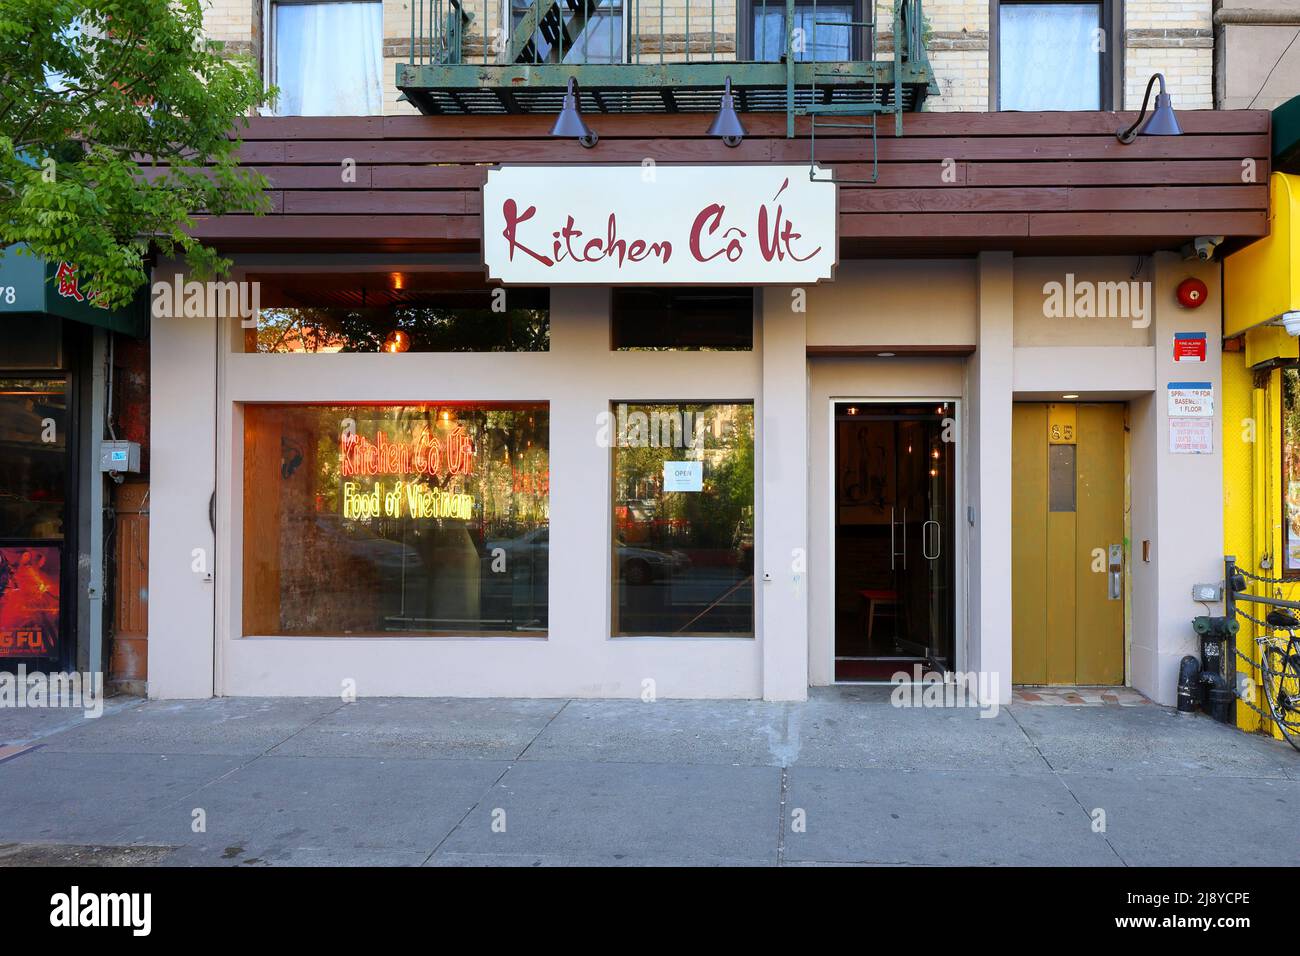 Kitchen Co Ut, 85 Chrystie St, New York, NYC storefront foto del ristorante vietnamita a Manhattan Chinatown. Cucina Cô út. Foto Stock